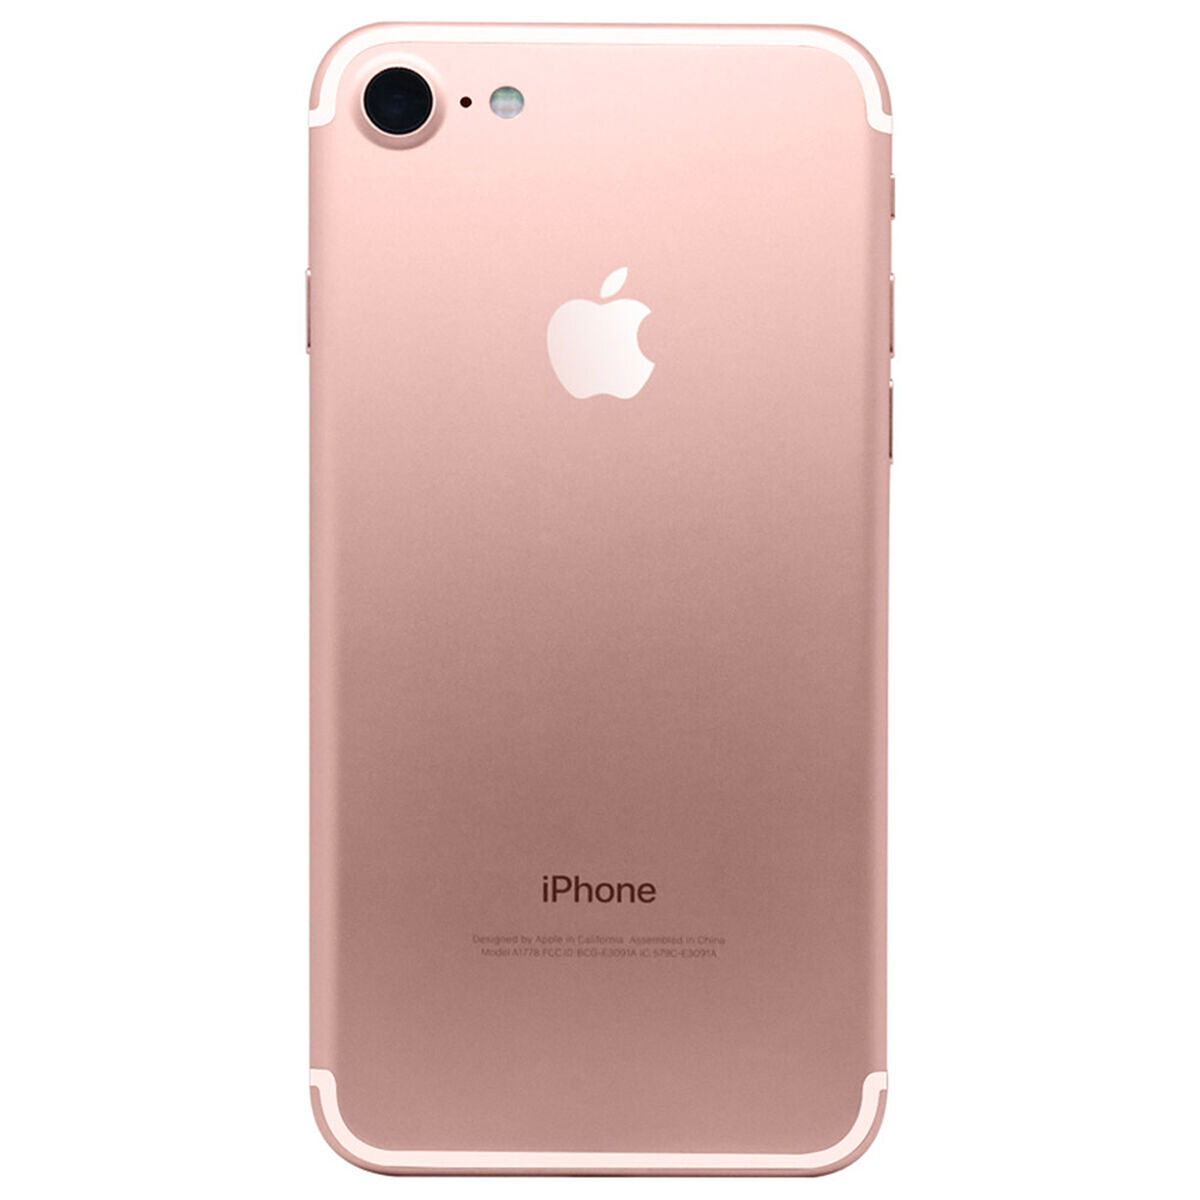 Celular Apple Iphone 7 128GB 4,7" Reacondicionado Rosado Liberado